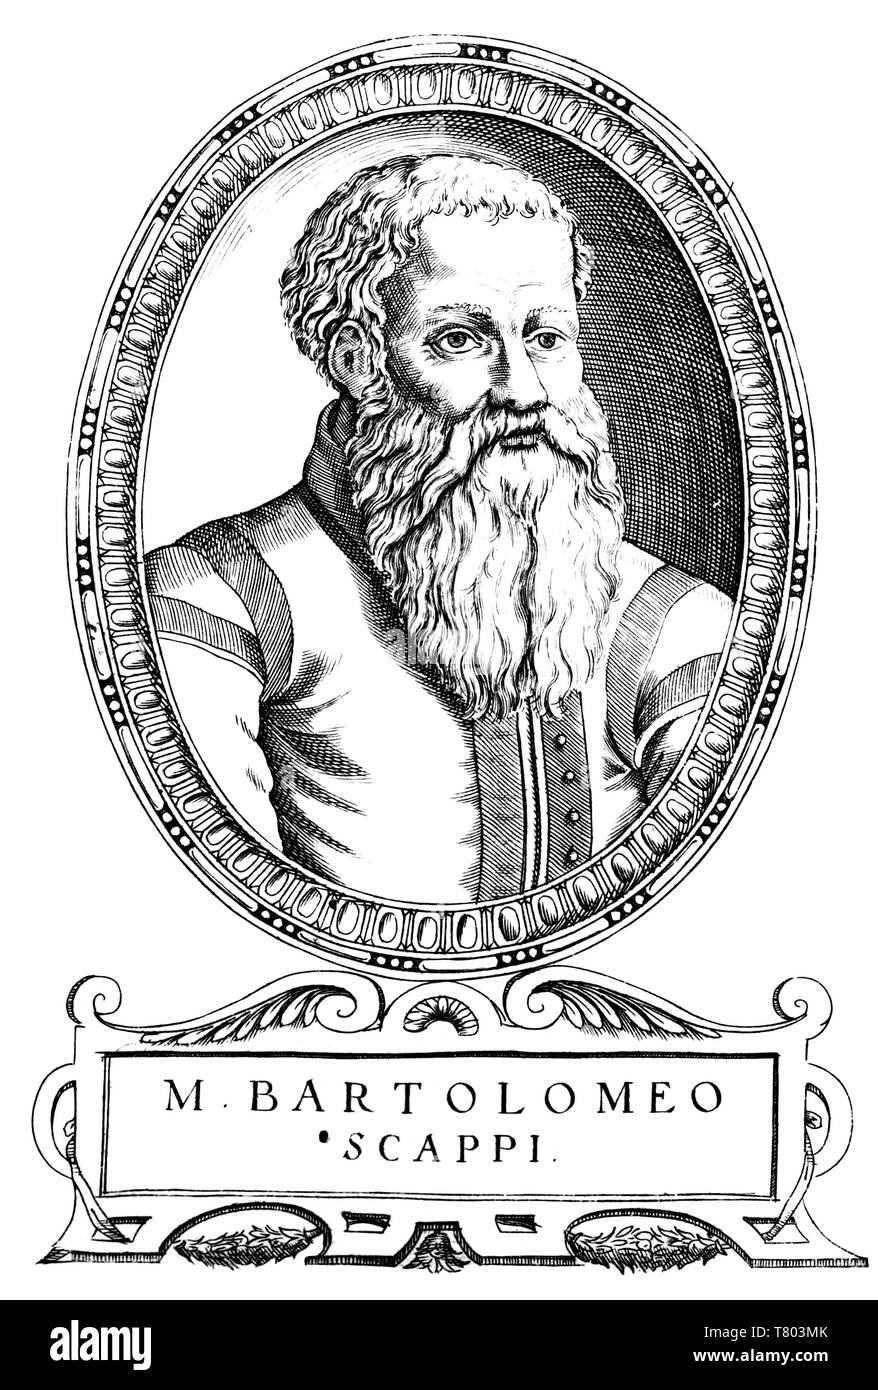 Bartolomeo Scappi, cuisinier italien de la Renaissance Banque D'Images